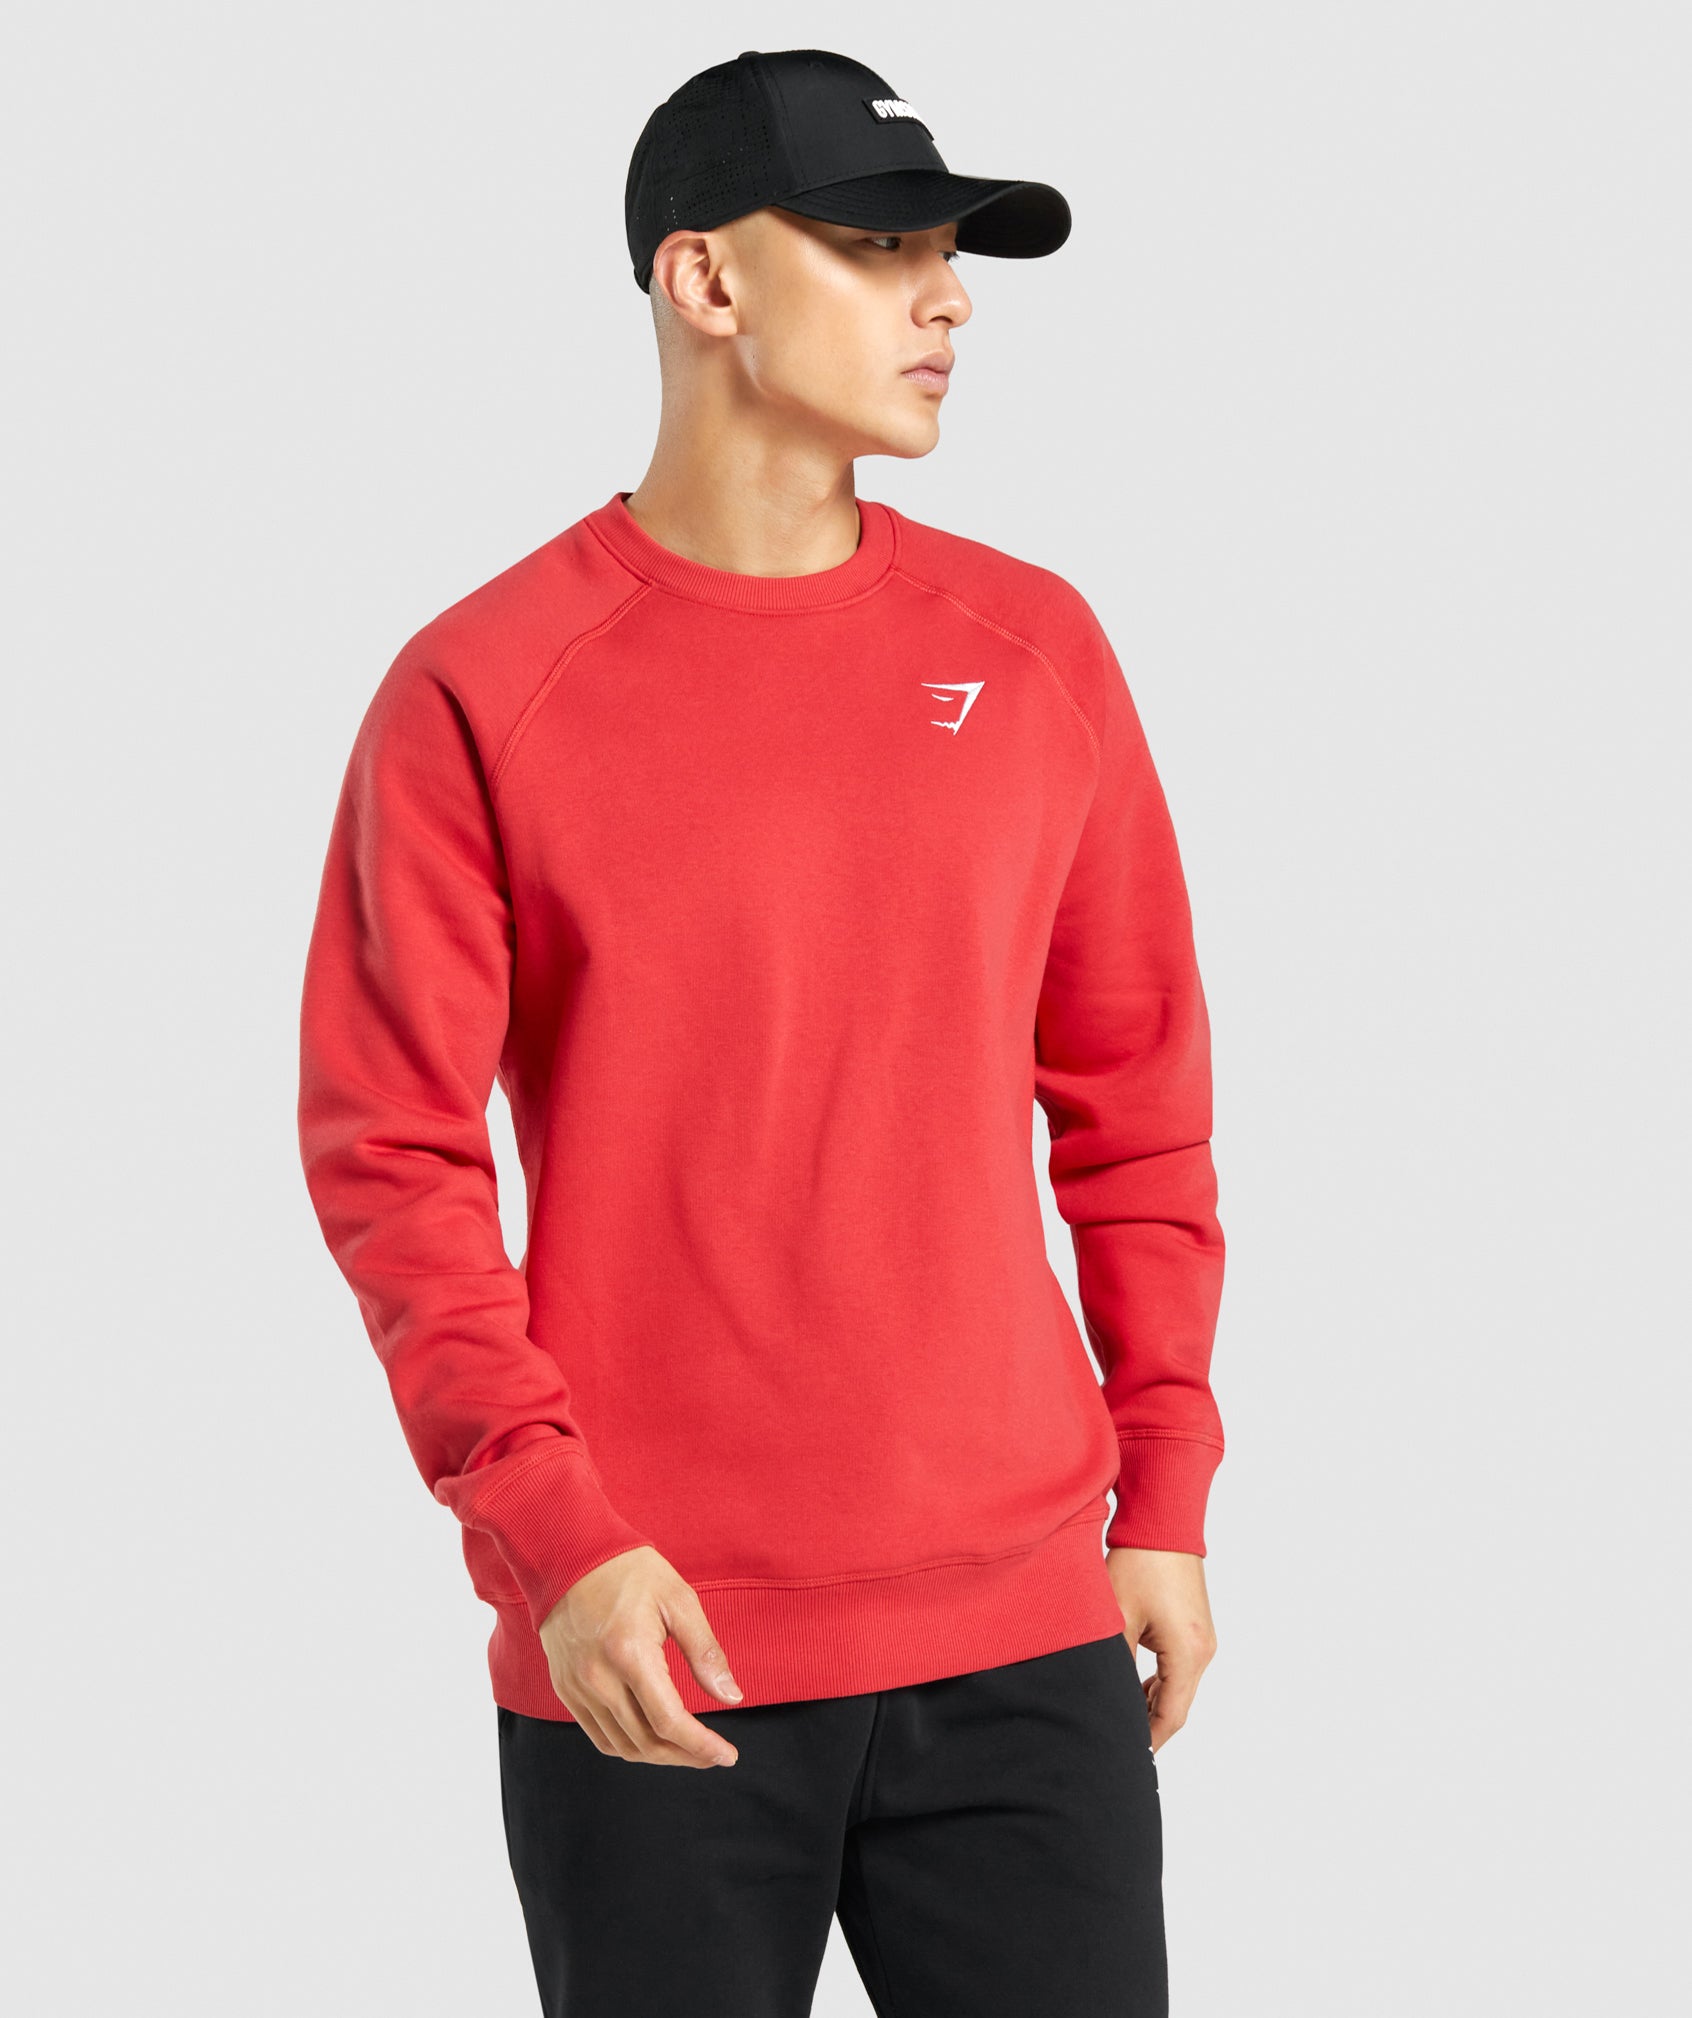 Crest Sweatshirt in Red